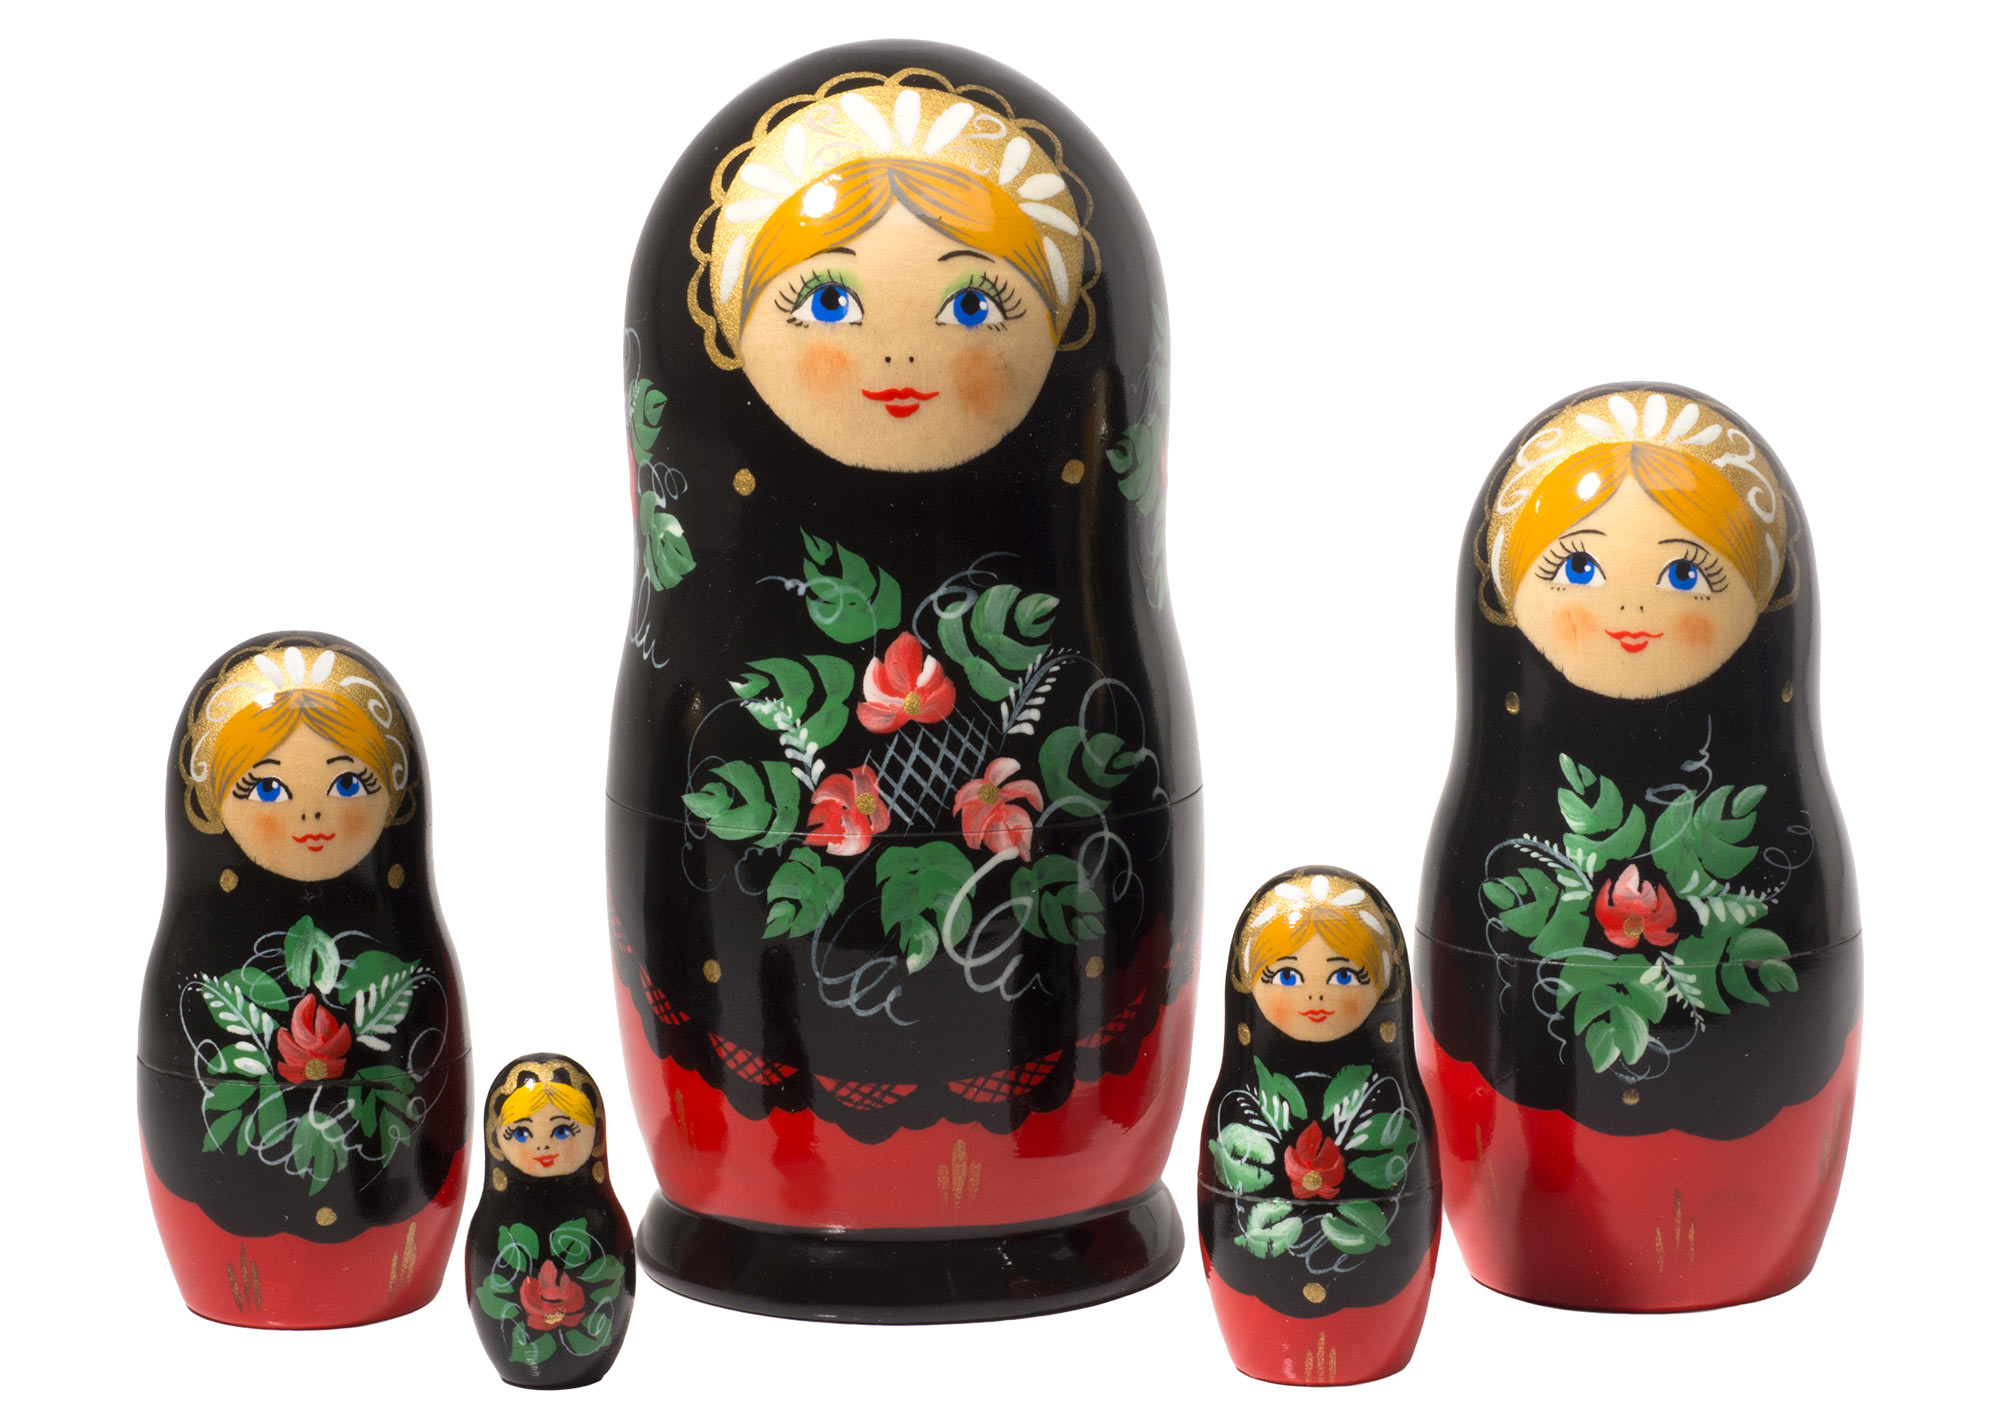 Buy Red & Black Classical Nesting Doll 5pc./6" at GoldenCockerel.com